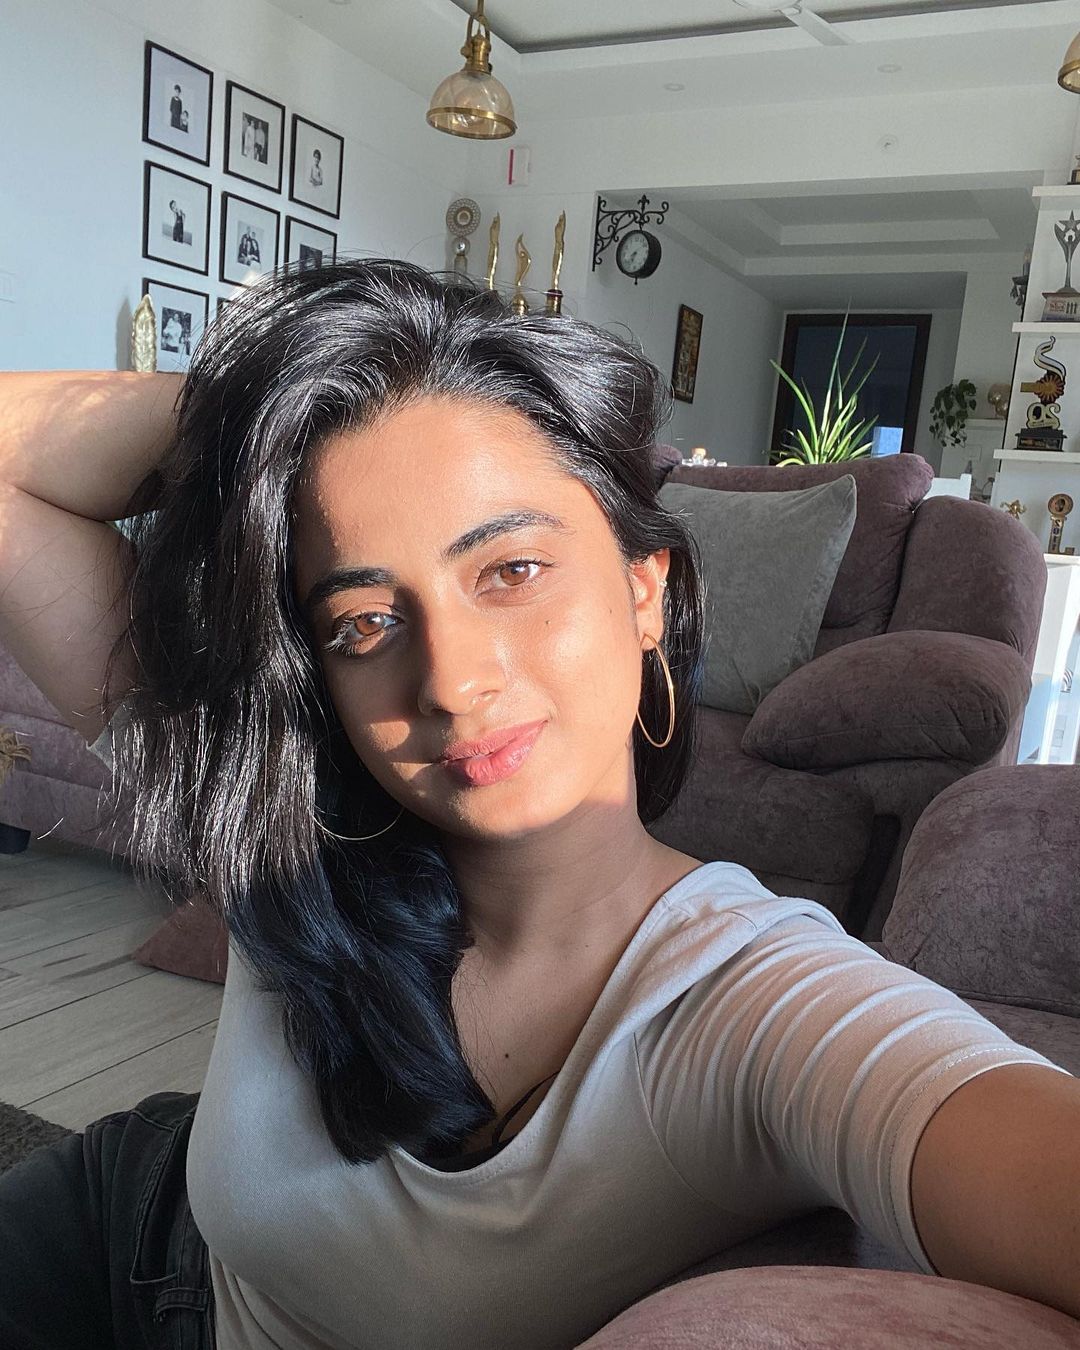 Naked Clips Of Namitha Pramod - Namitha Pramod looking beautiful in new sunkissed photos photos went viral  in socialmedia | Namitha Pramod : à´ªà´Ÿàµà´Ÿà´¿à´•àµà´•àµà´Ÿàµà´Ÿà´¿à´¯àµ‹à´ŸàµŠà´ªàµà´ªà´‚ à´¸àµº à´•à´¿à´¸àµâ€Œà´¡àµâ€Œ  à´šà´¿à´¤àµà´°à´™àµà´™à´³àµà´®à´¾à´¯à´¿ à´¨à´